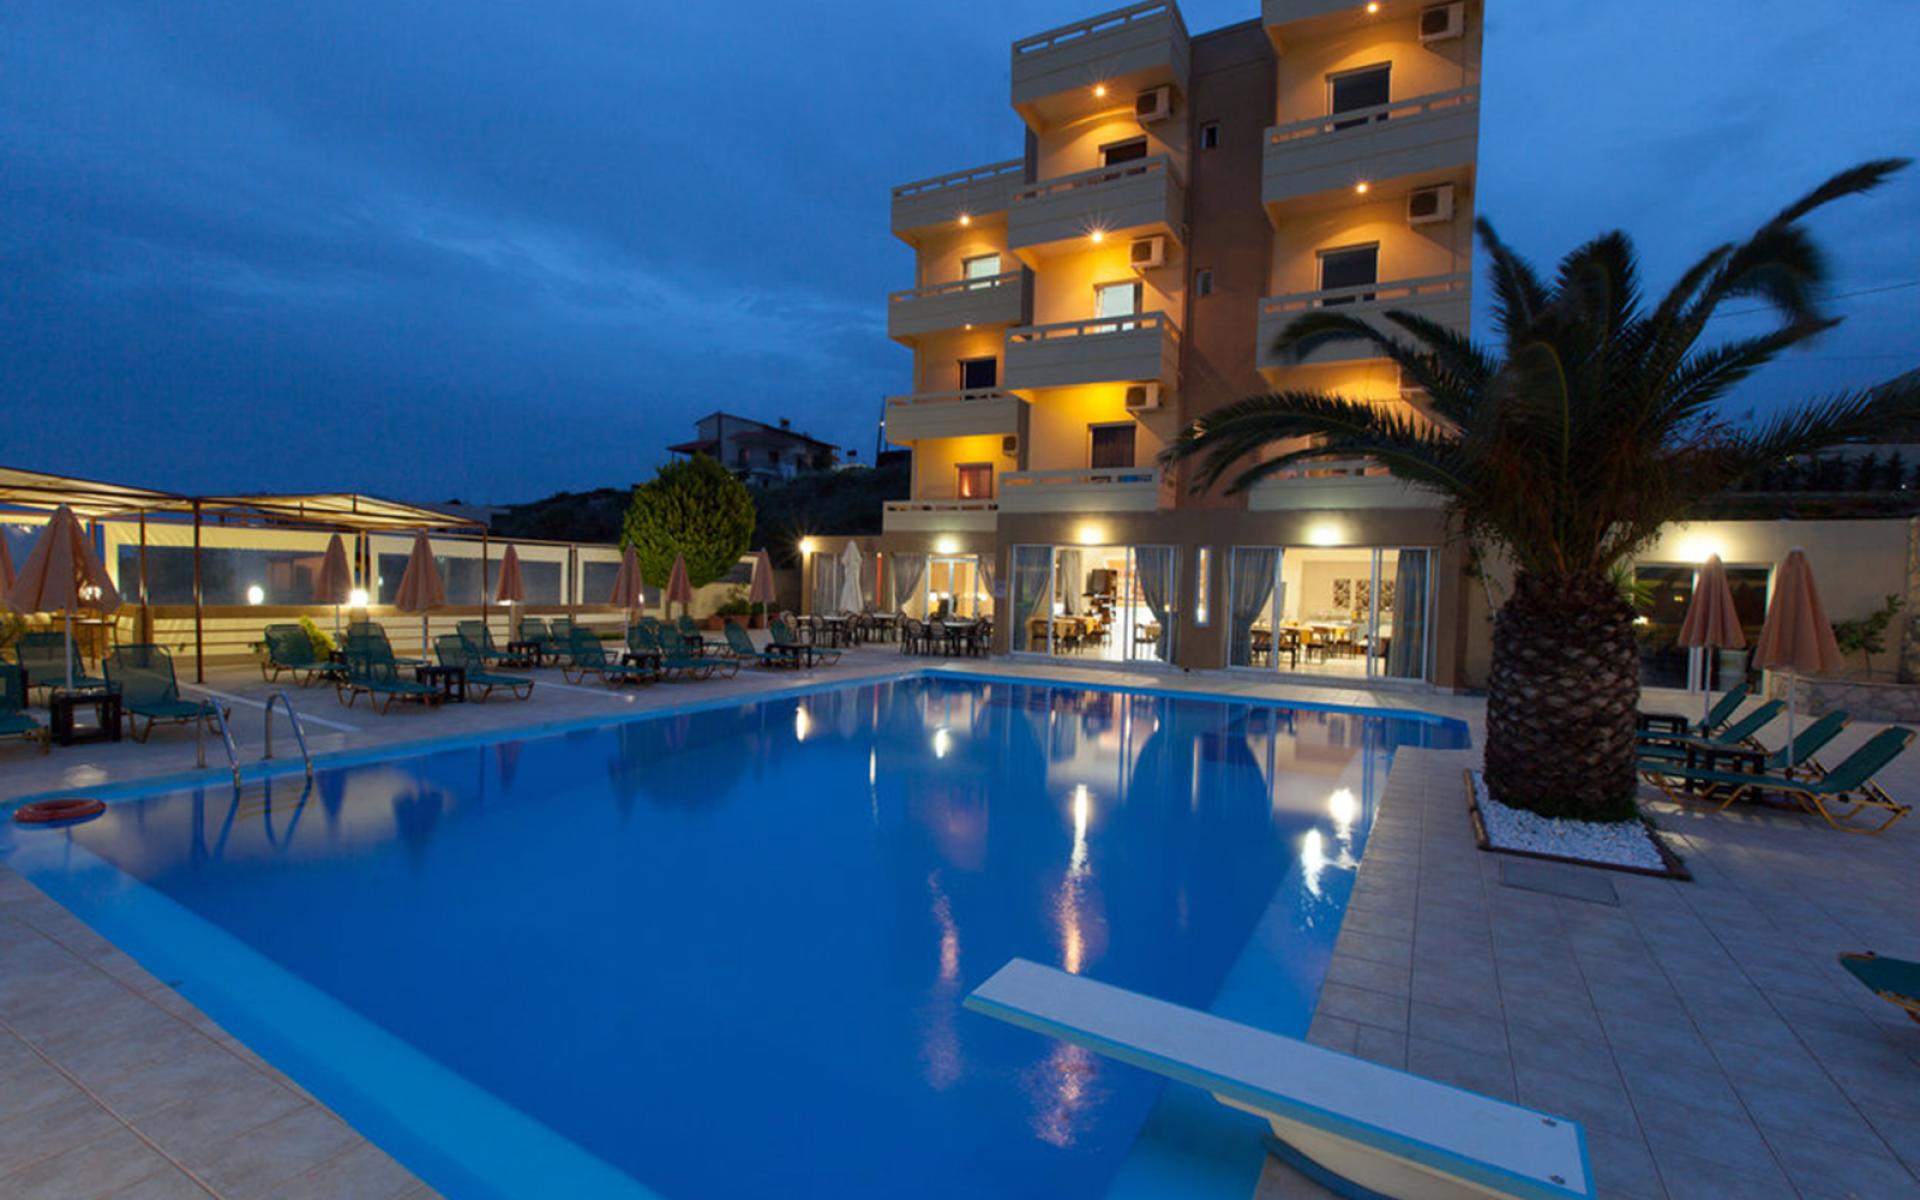 All World Hotel - Top Hotel Stalos New Cydonia Chania Crete Greece, hotels Psathi Discount Chania Chania accommodation, rentals Discount Chania Crete, Chania Town Studios Psathi New Cydonia,